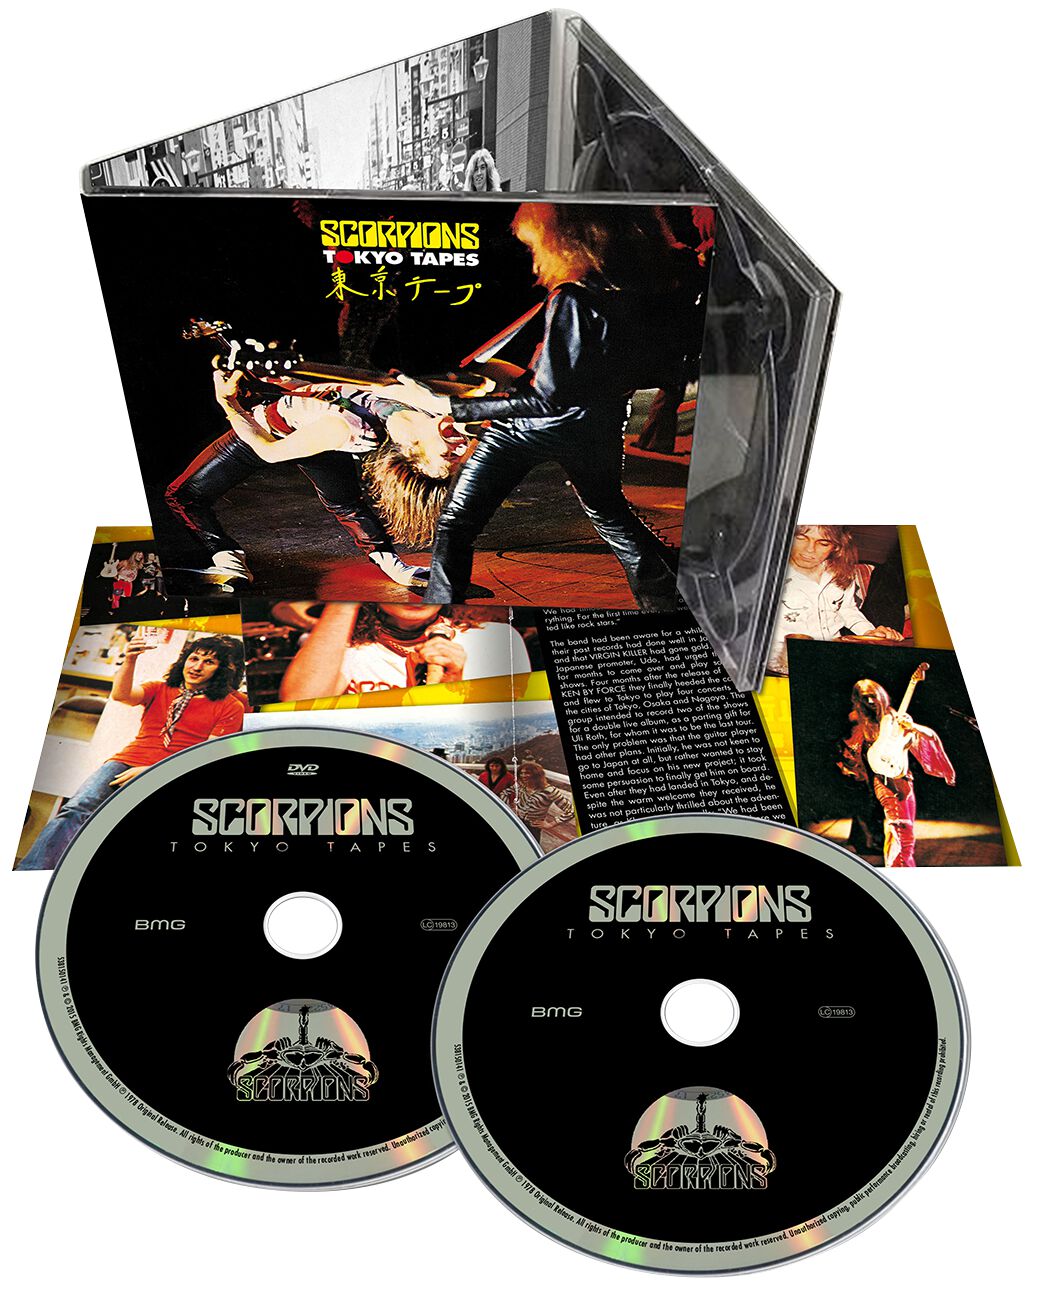 Scorpions Tokyo tapes CD multicolor von Scorpions